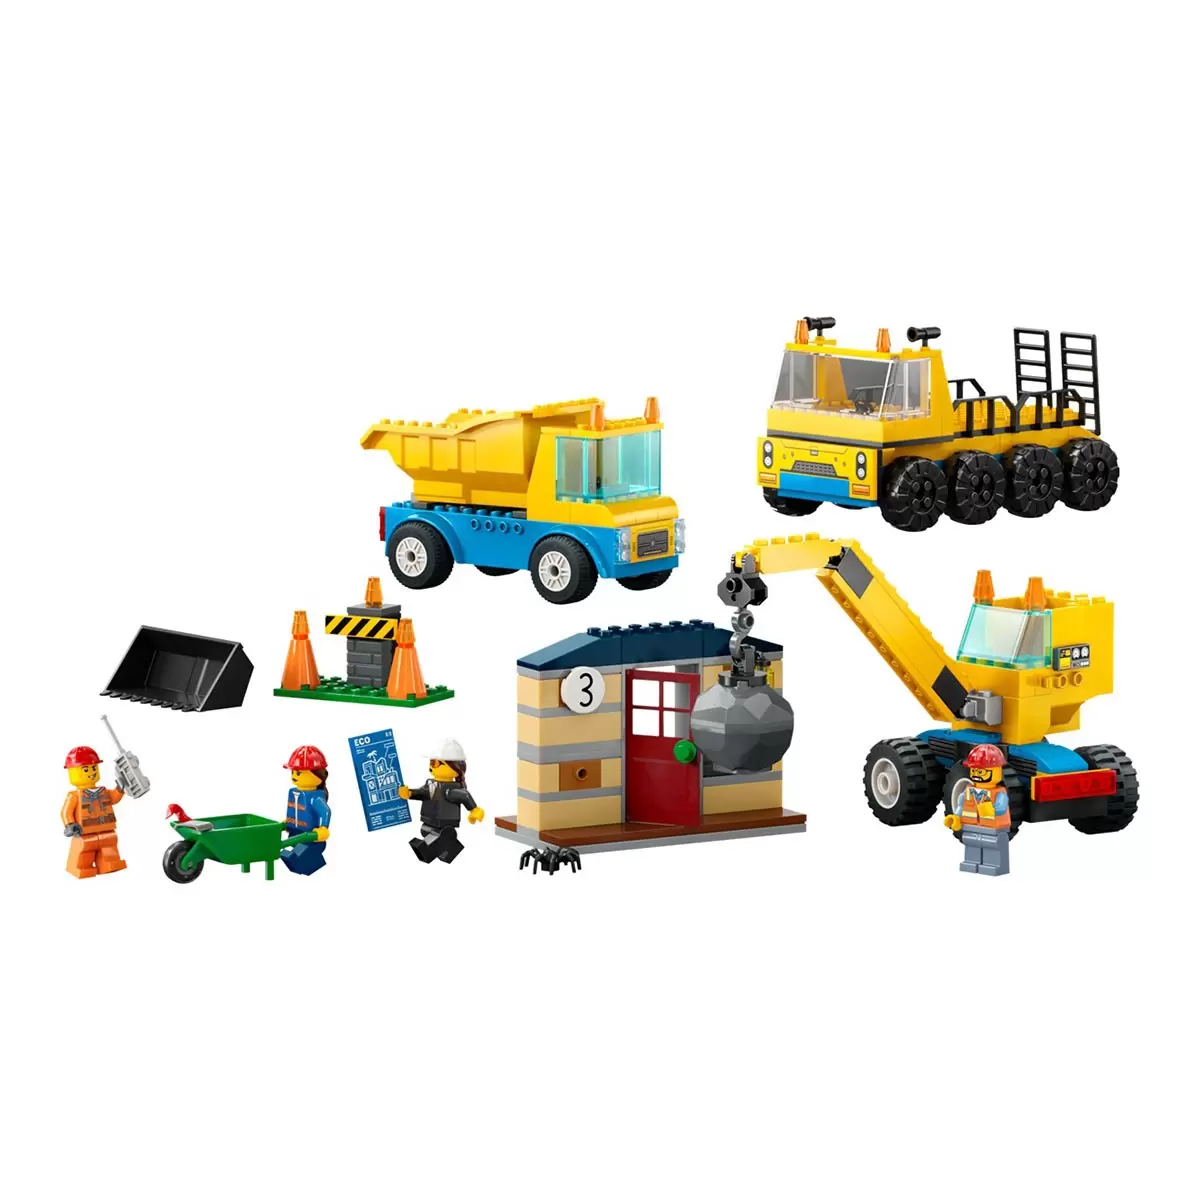 LEGO 城市系列 工程卡車和拆除起重機 60391